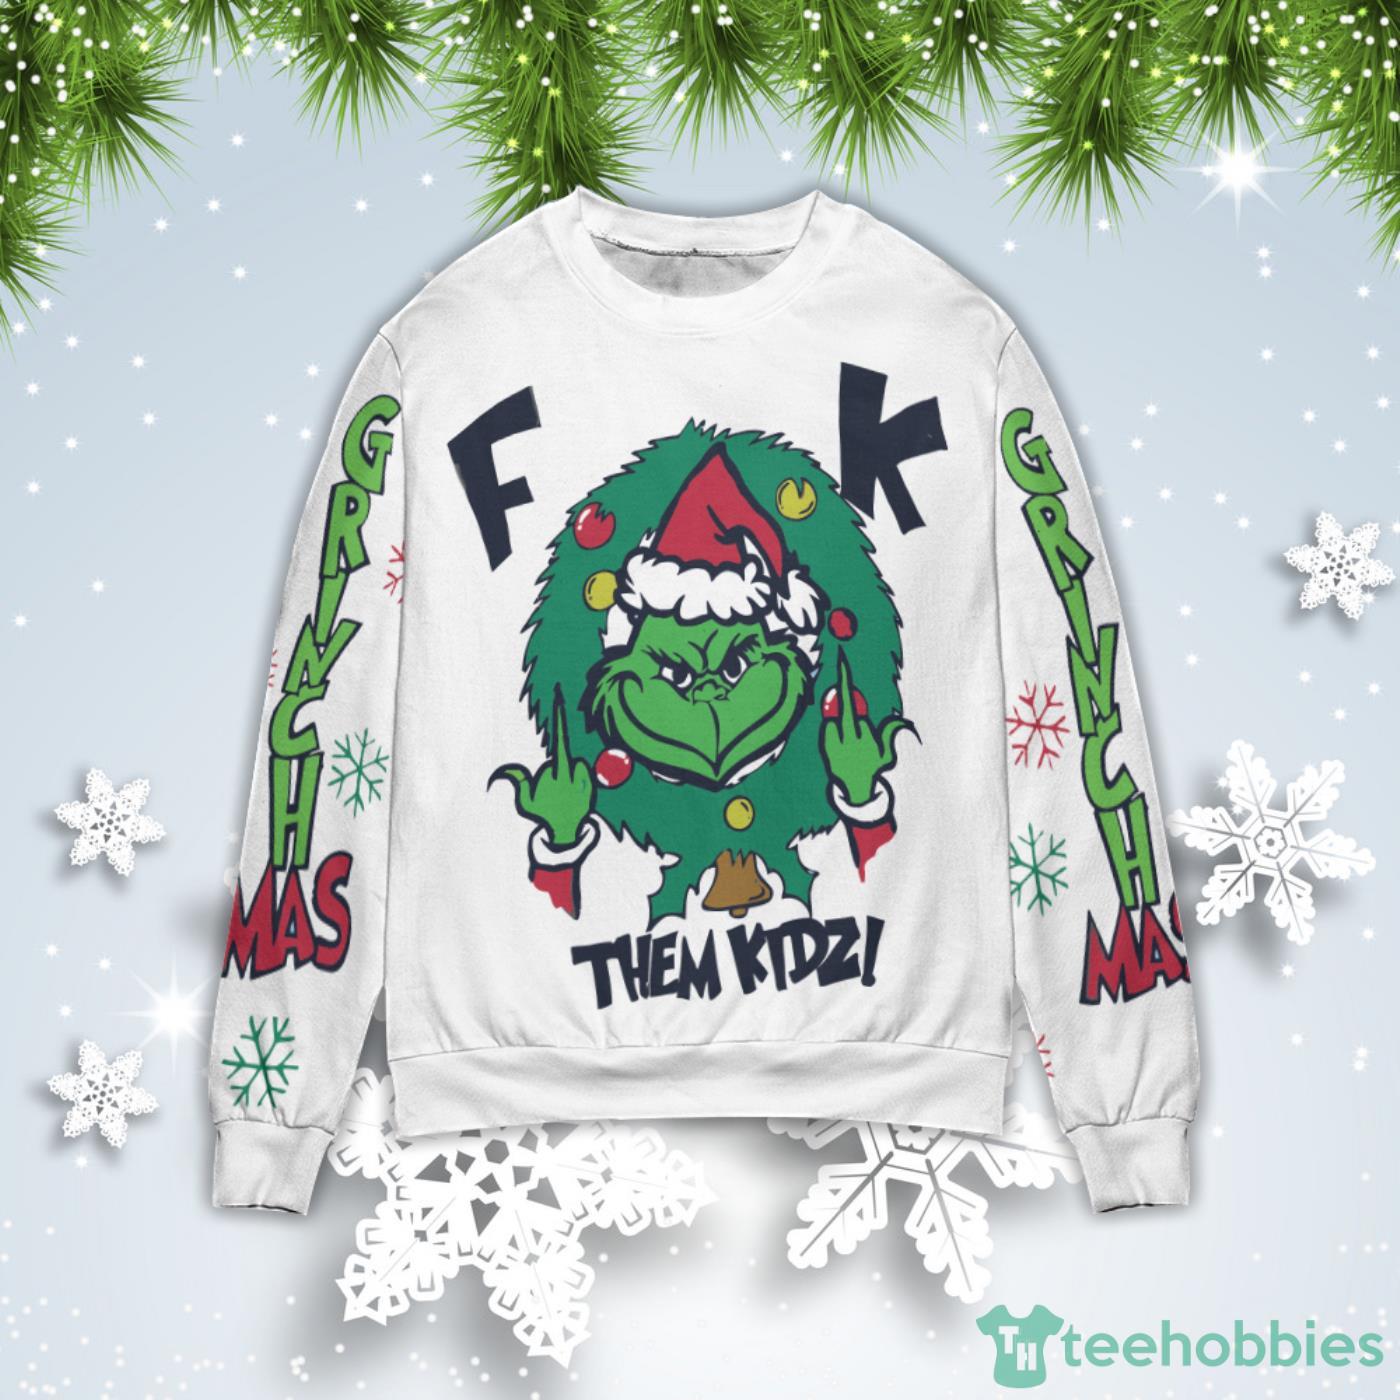 Fck Them Kidz Christmas Gift Ugly Christmas Sweater Product Photo 1